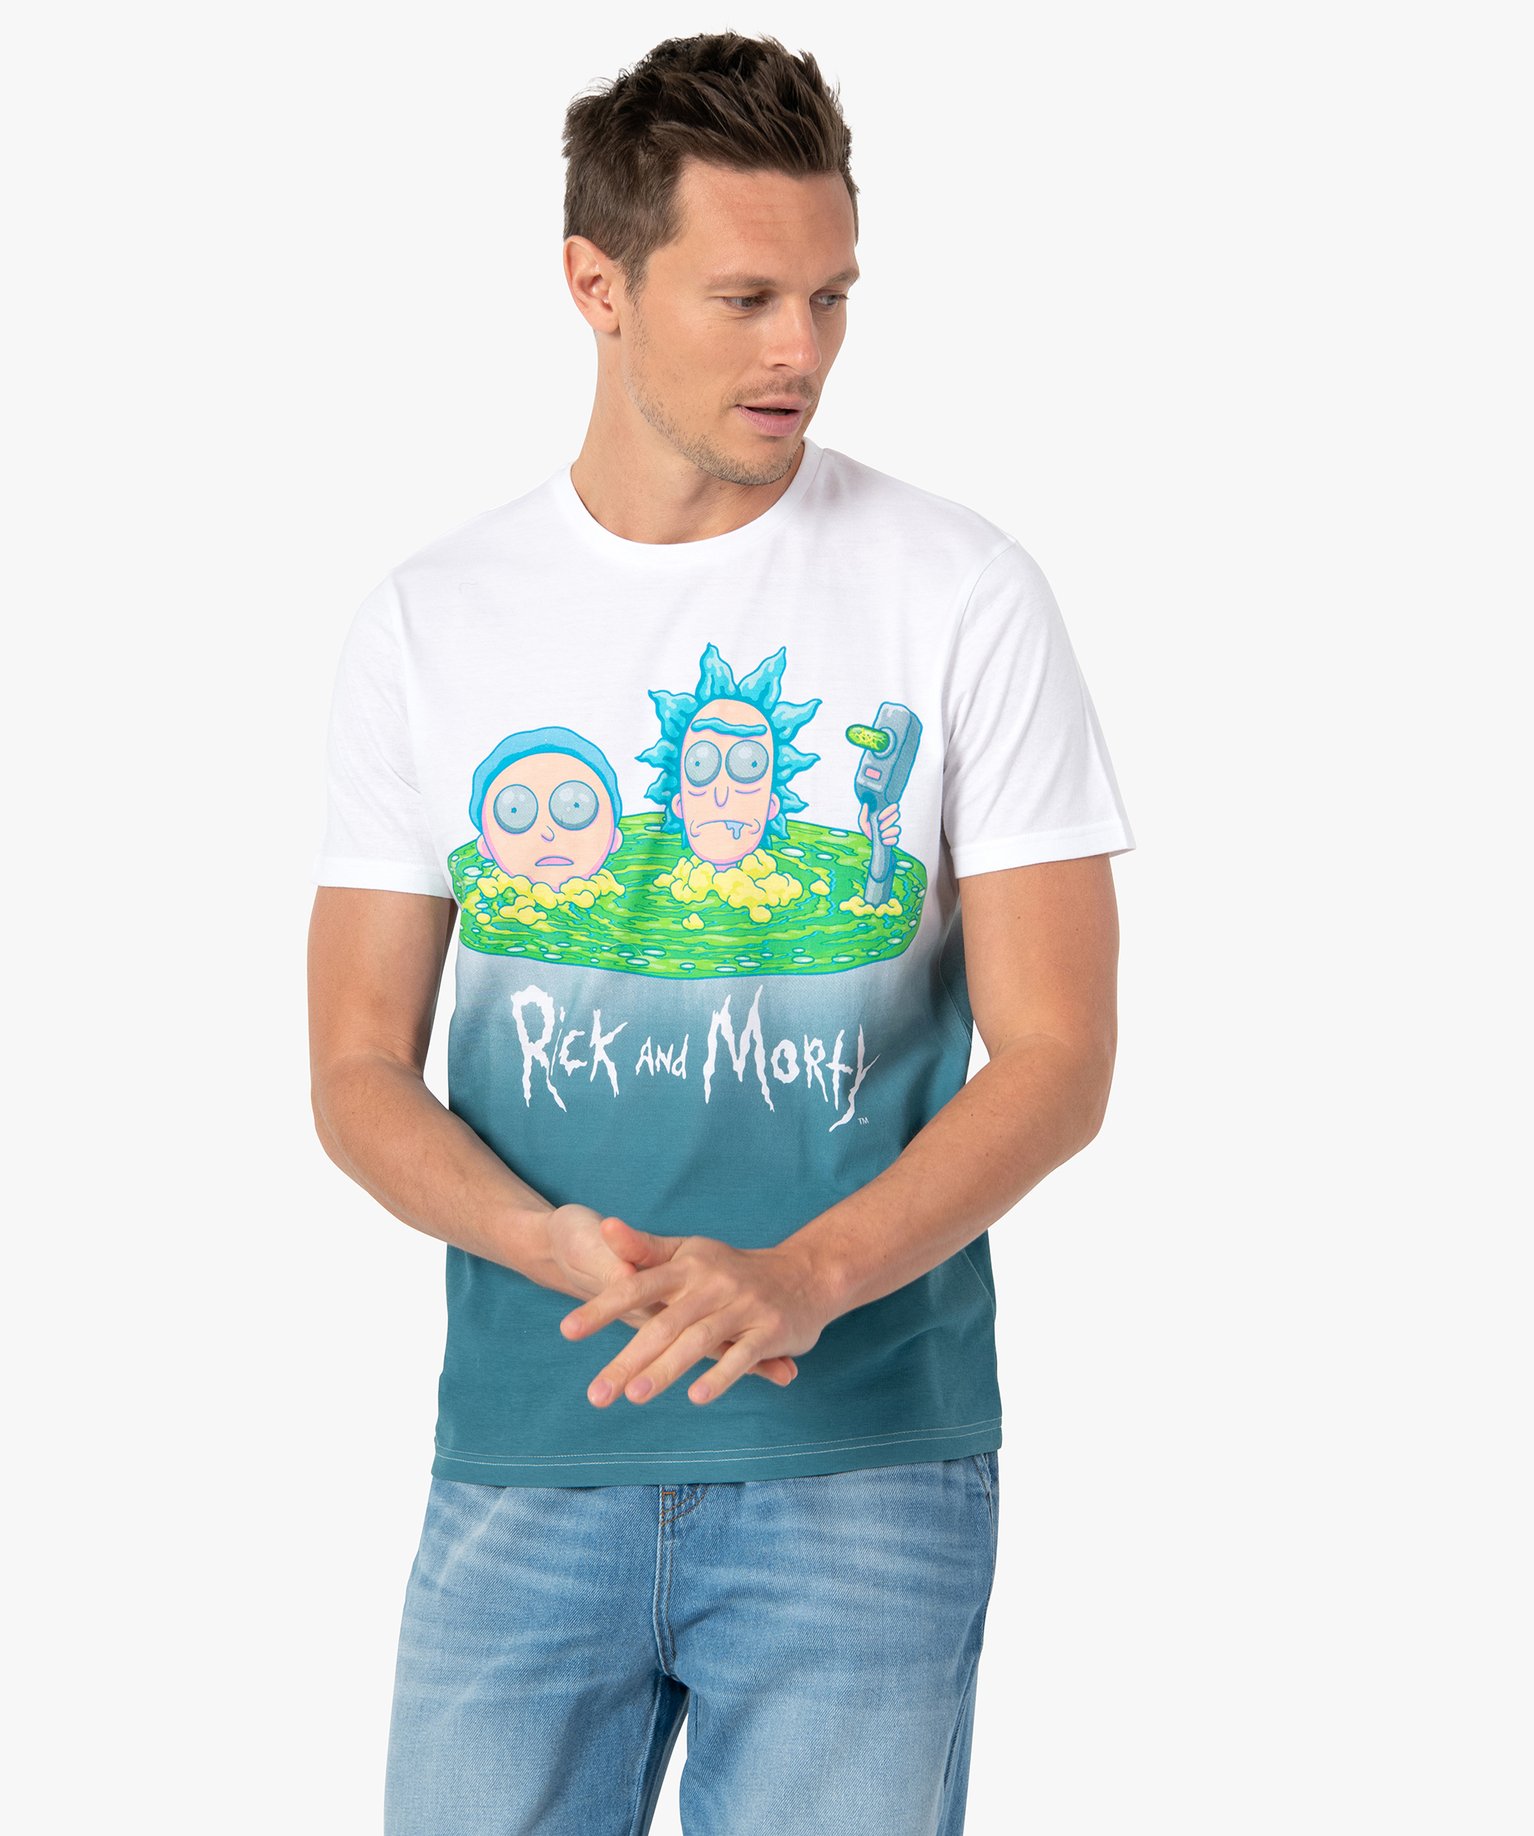 tee-shirt homme avec motif xxl - rick and morty bleu tee-shirts